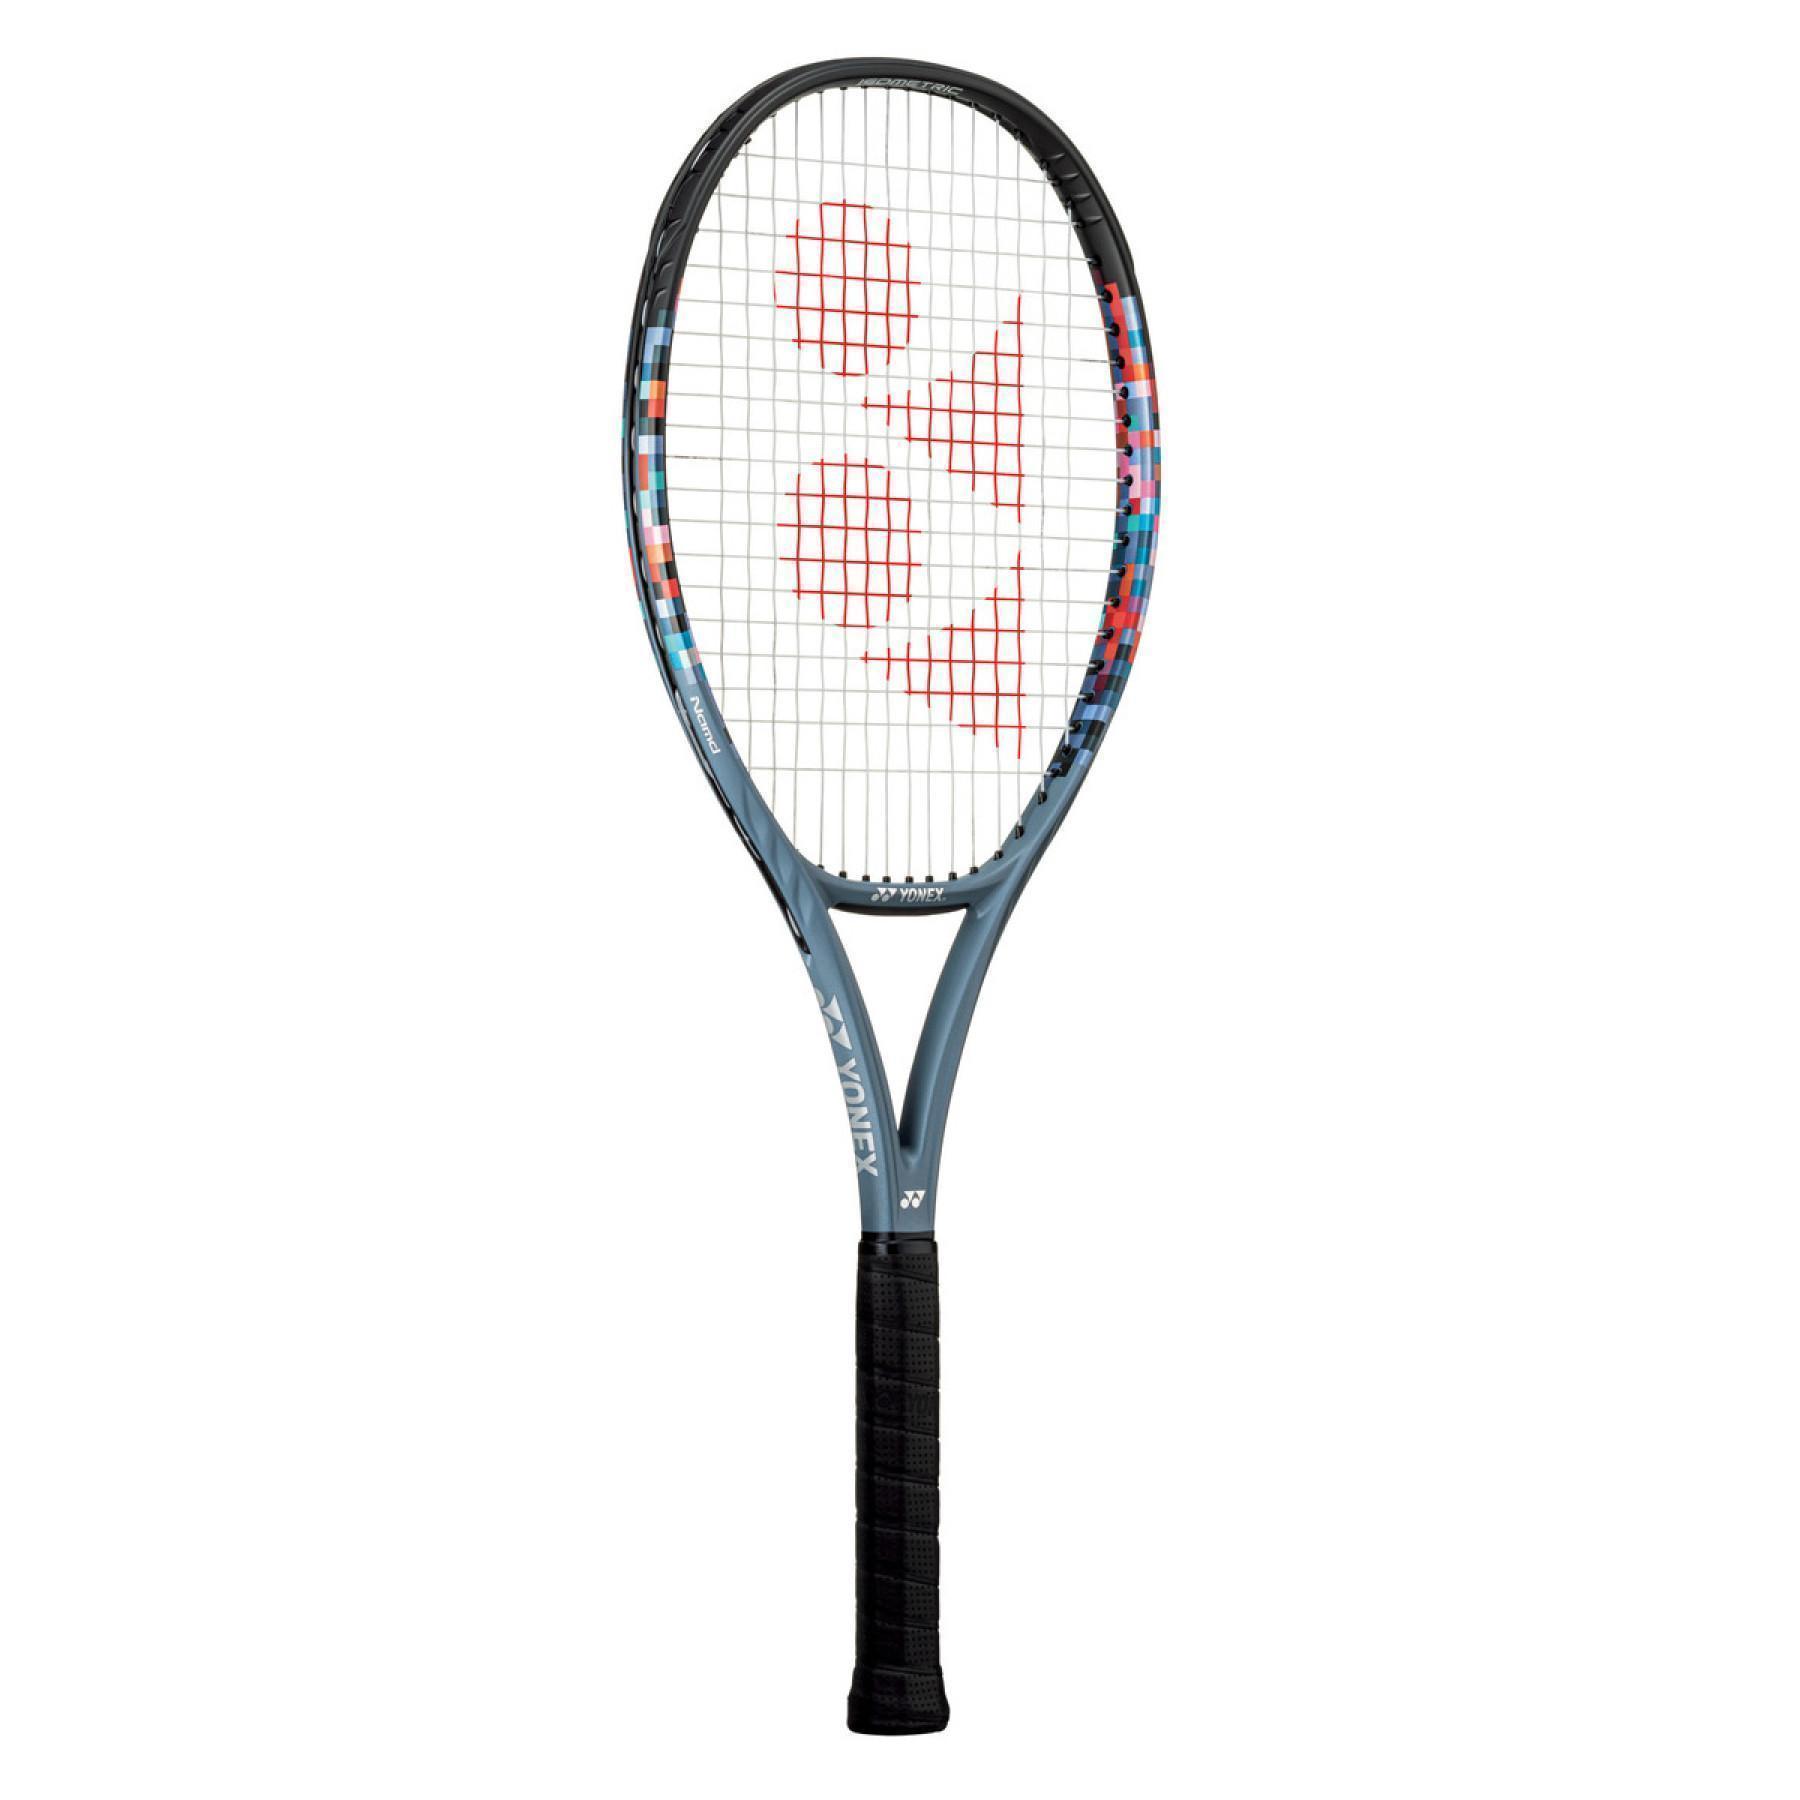 Tennis racket Yonex Vcore 100 limited